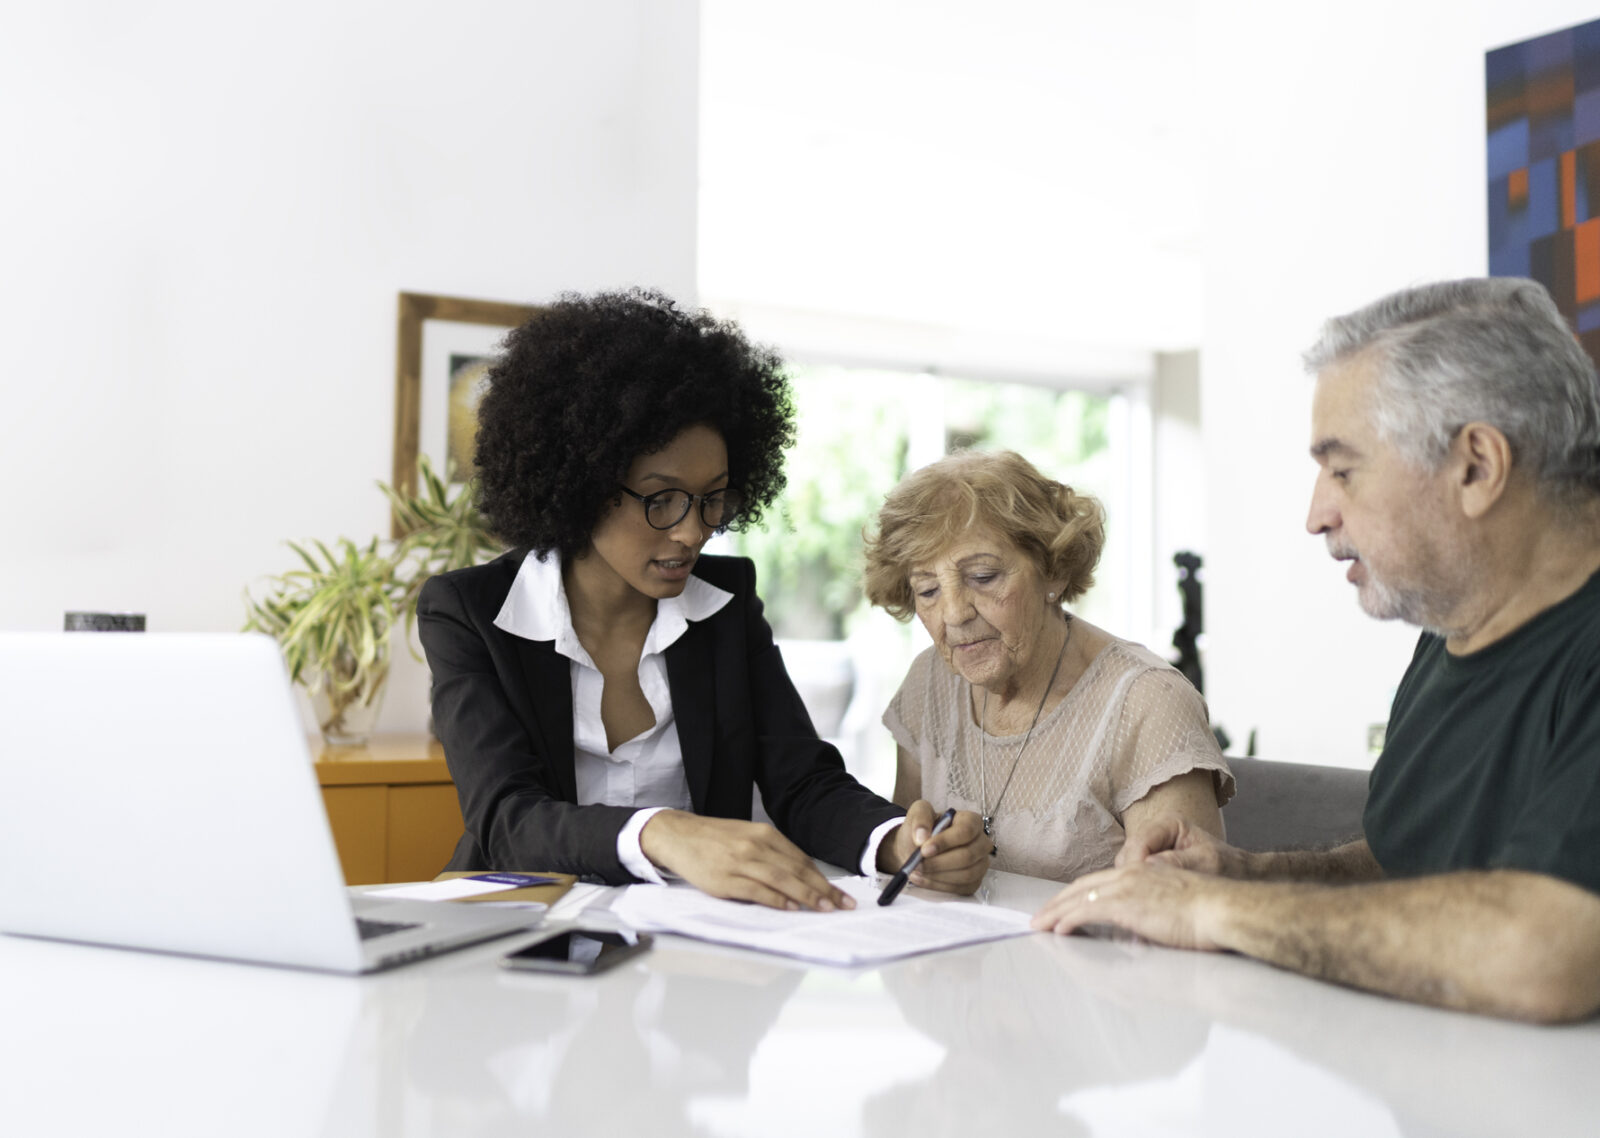 Financial advisor helping a senior couple at home